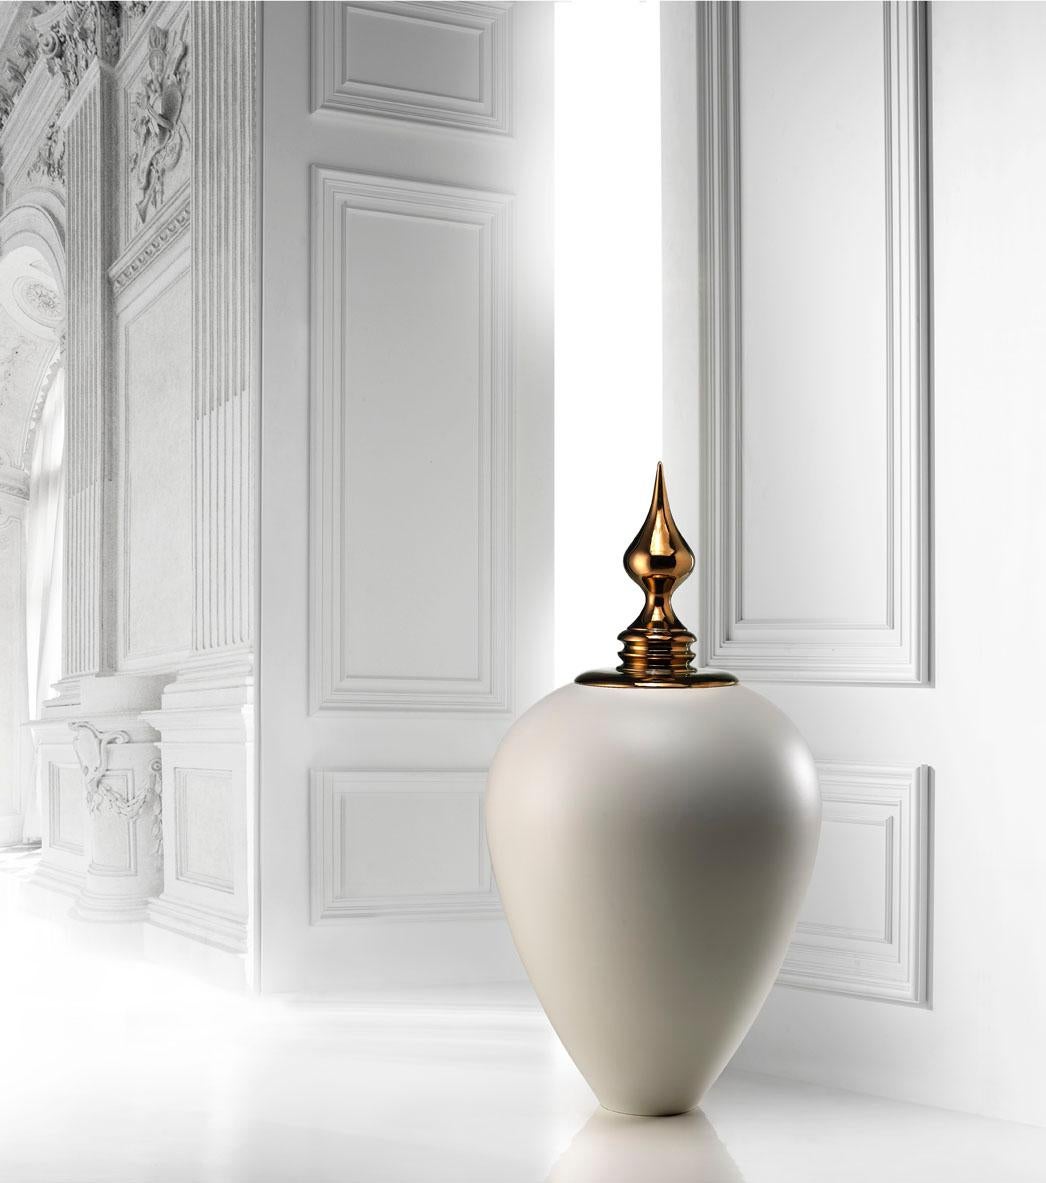 NADIRA - Ceramic vase white glazed with handcrafted bronze top

code VS012
measures: Height 110.0 cm. - diameter 60.0 cm.